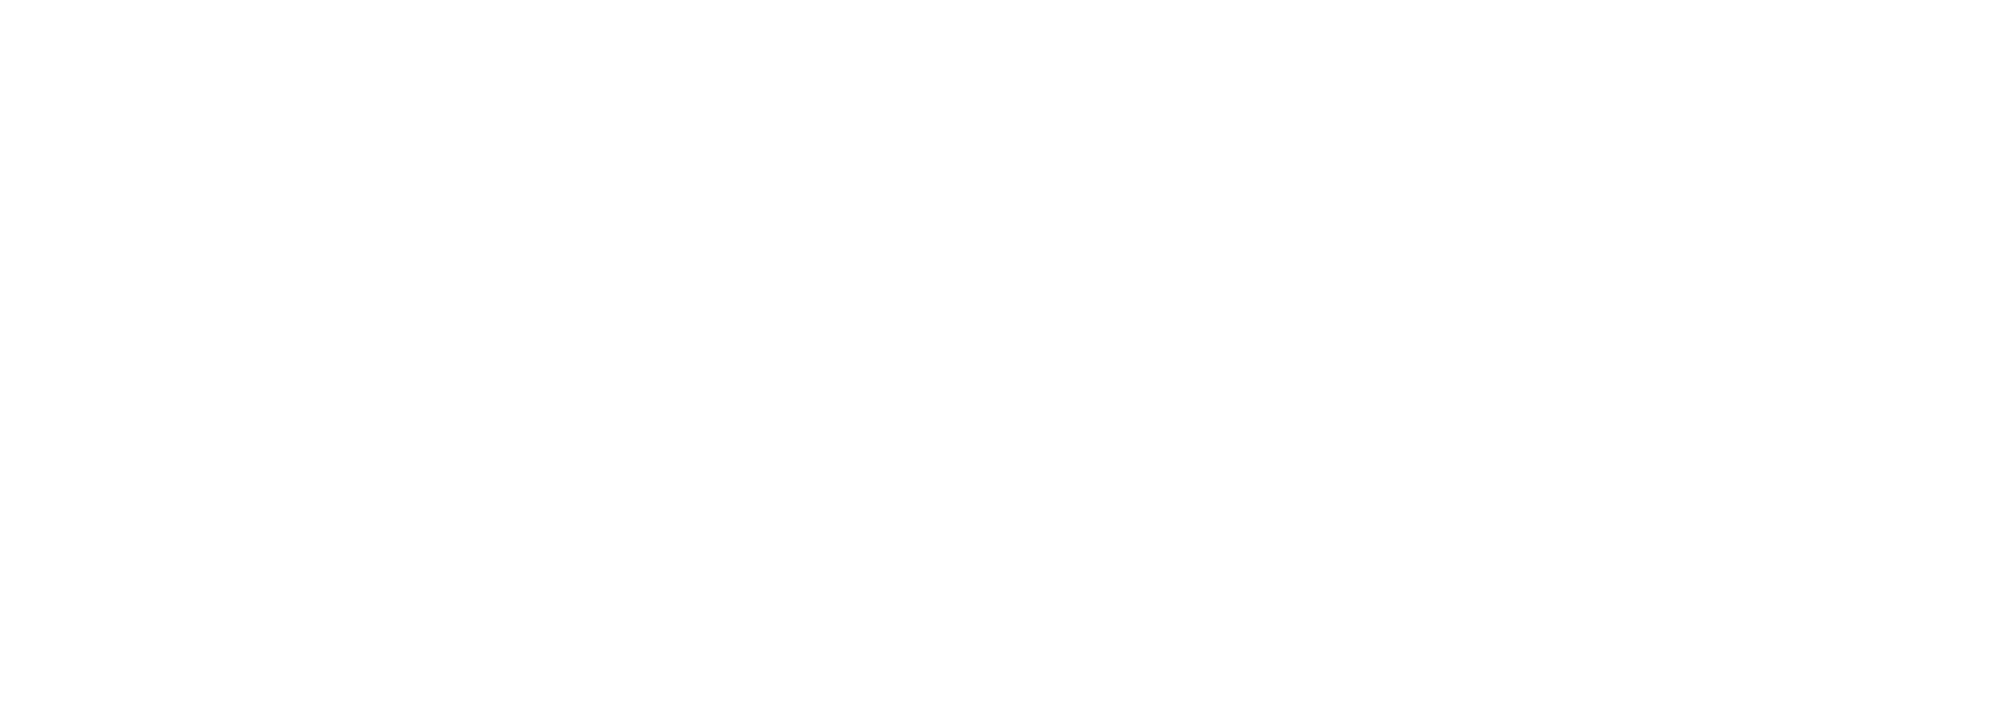 Cruisin’… On A Sunday Morning